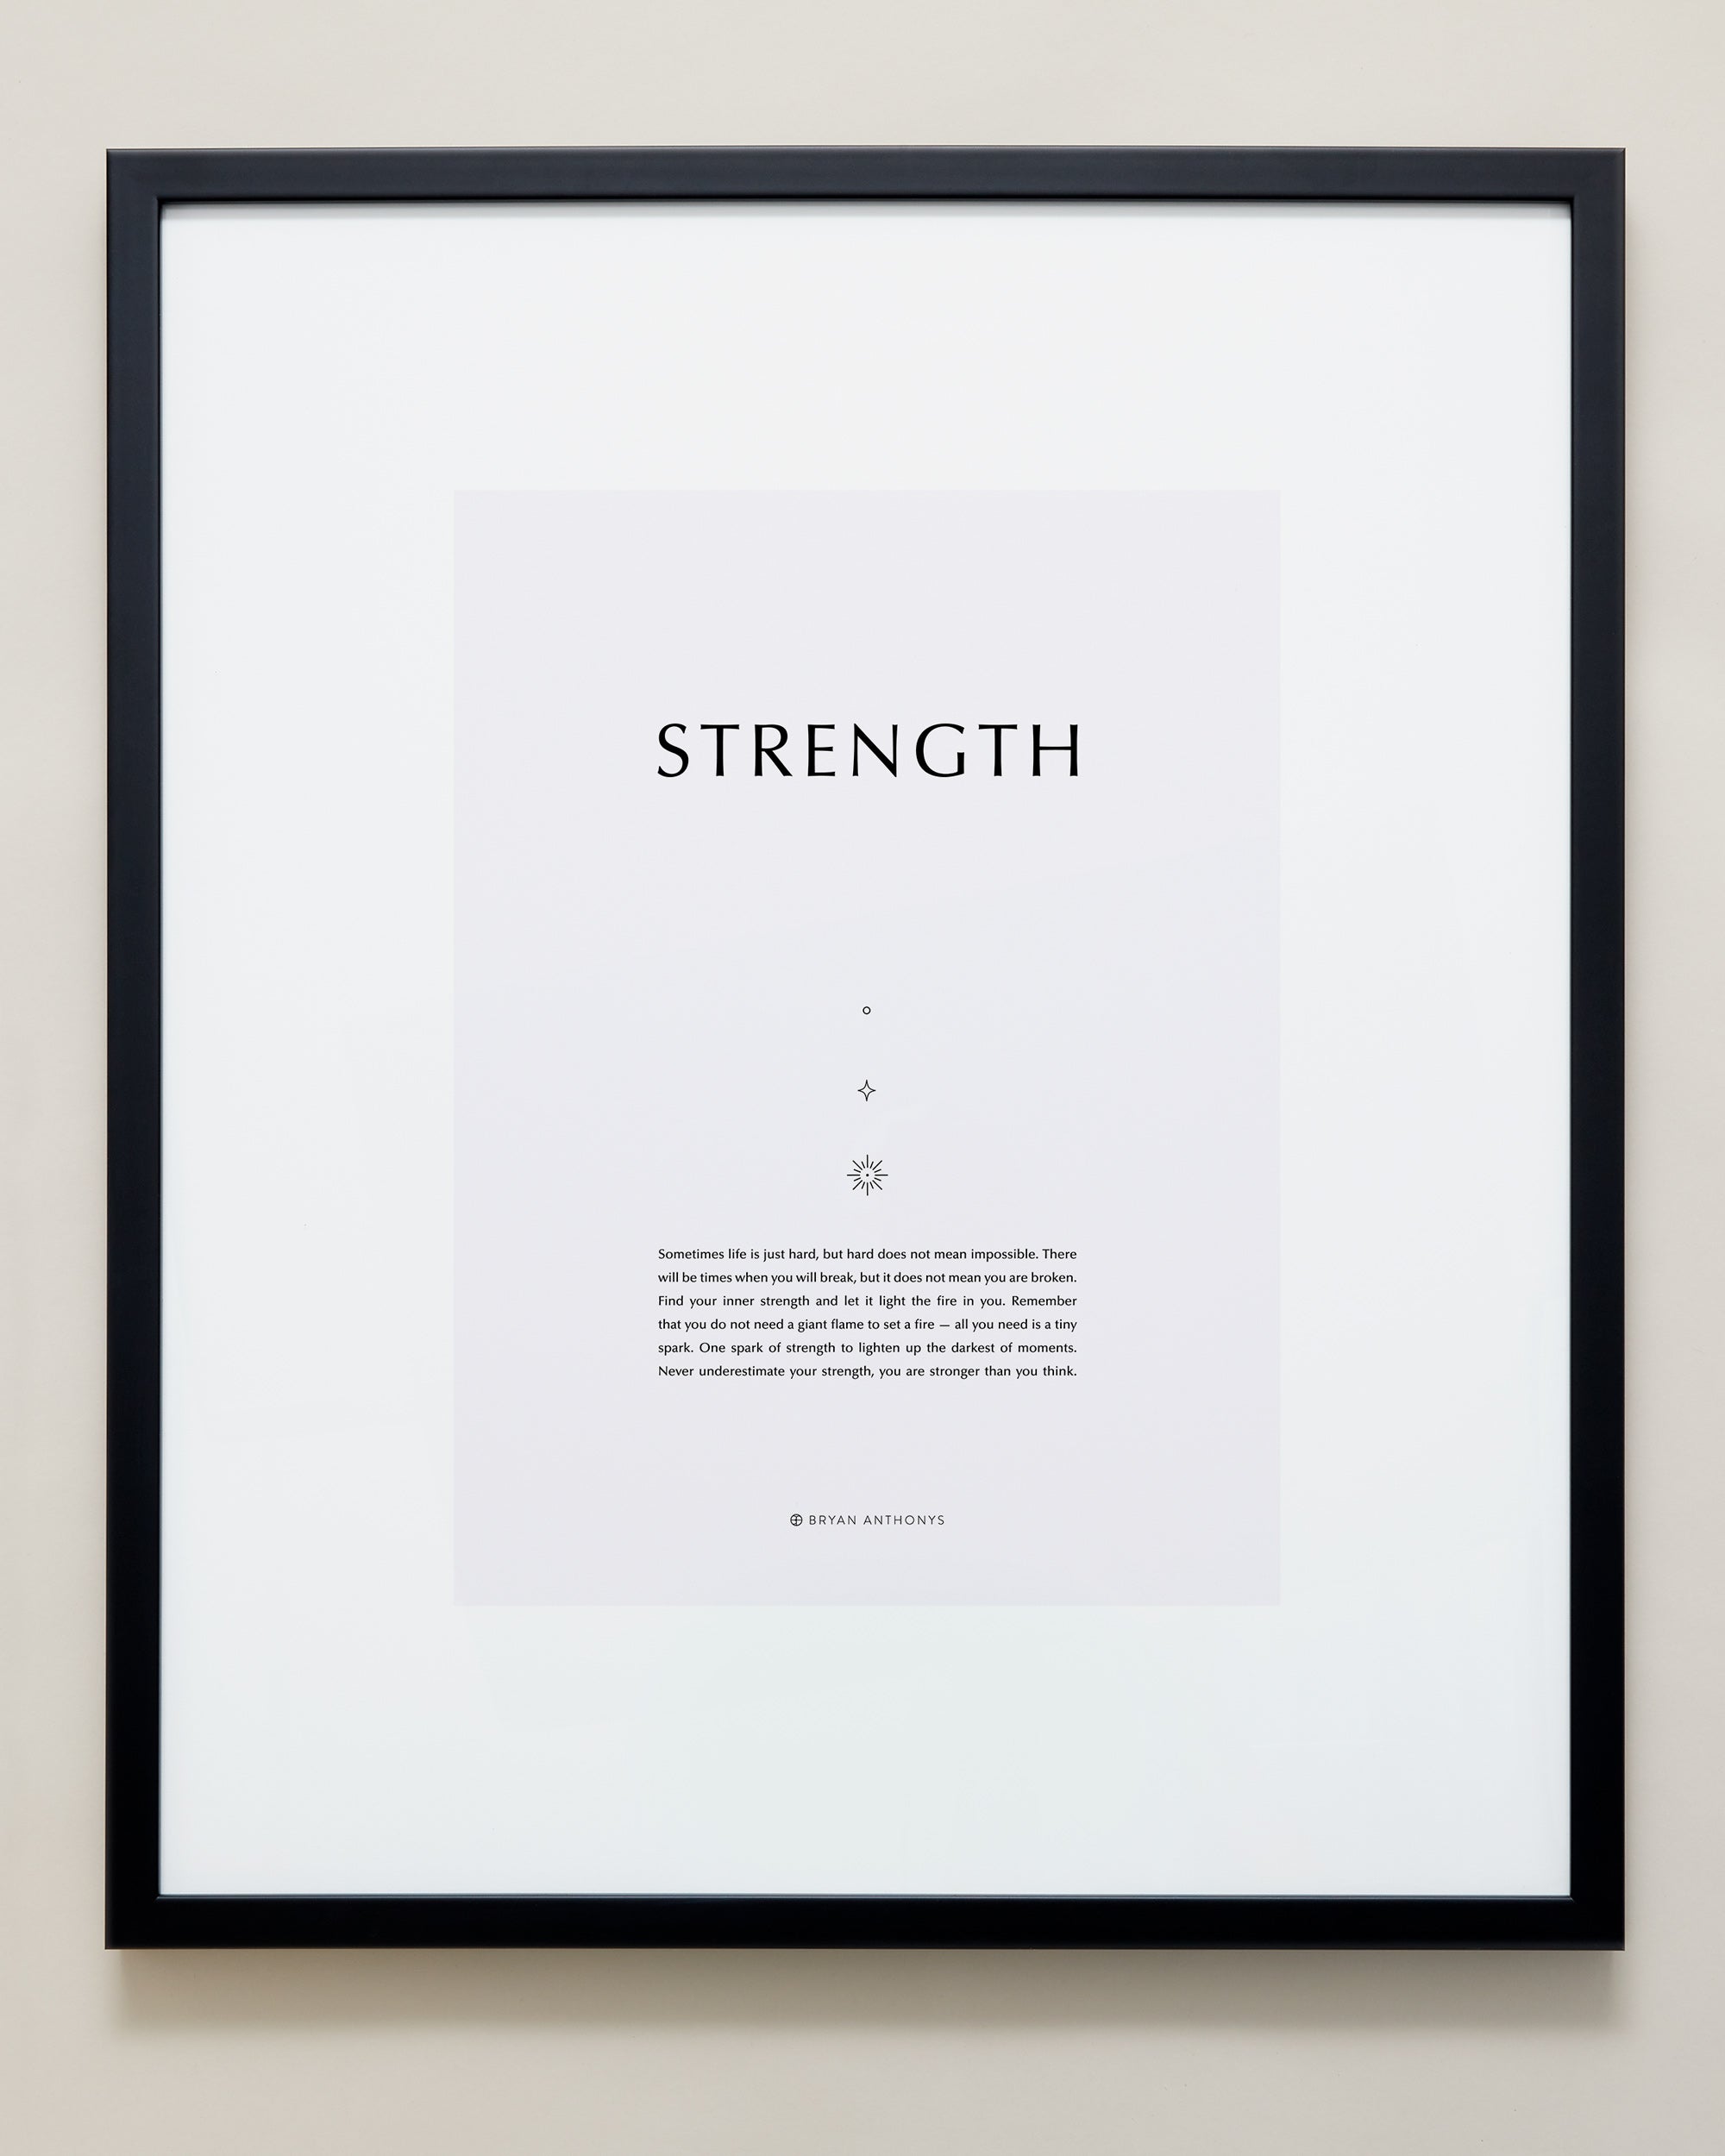 Bryan Anthonys Home Decor Purposeful Prints Strength Iconic Framed Print Gray Art With Black Frame 20x24